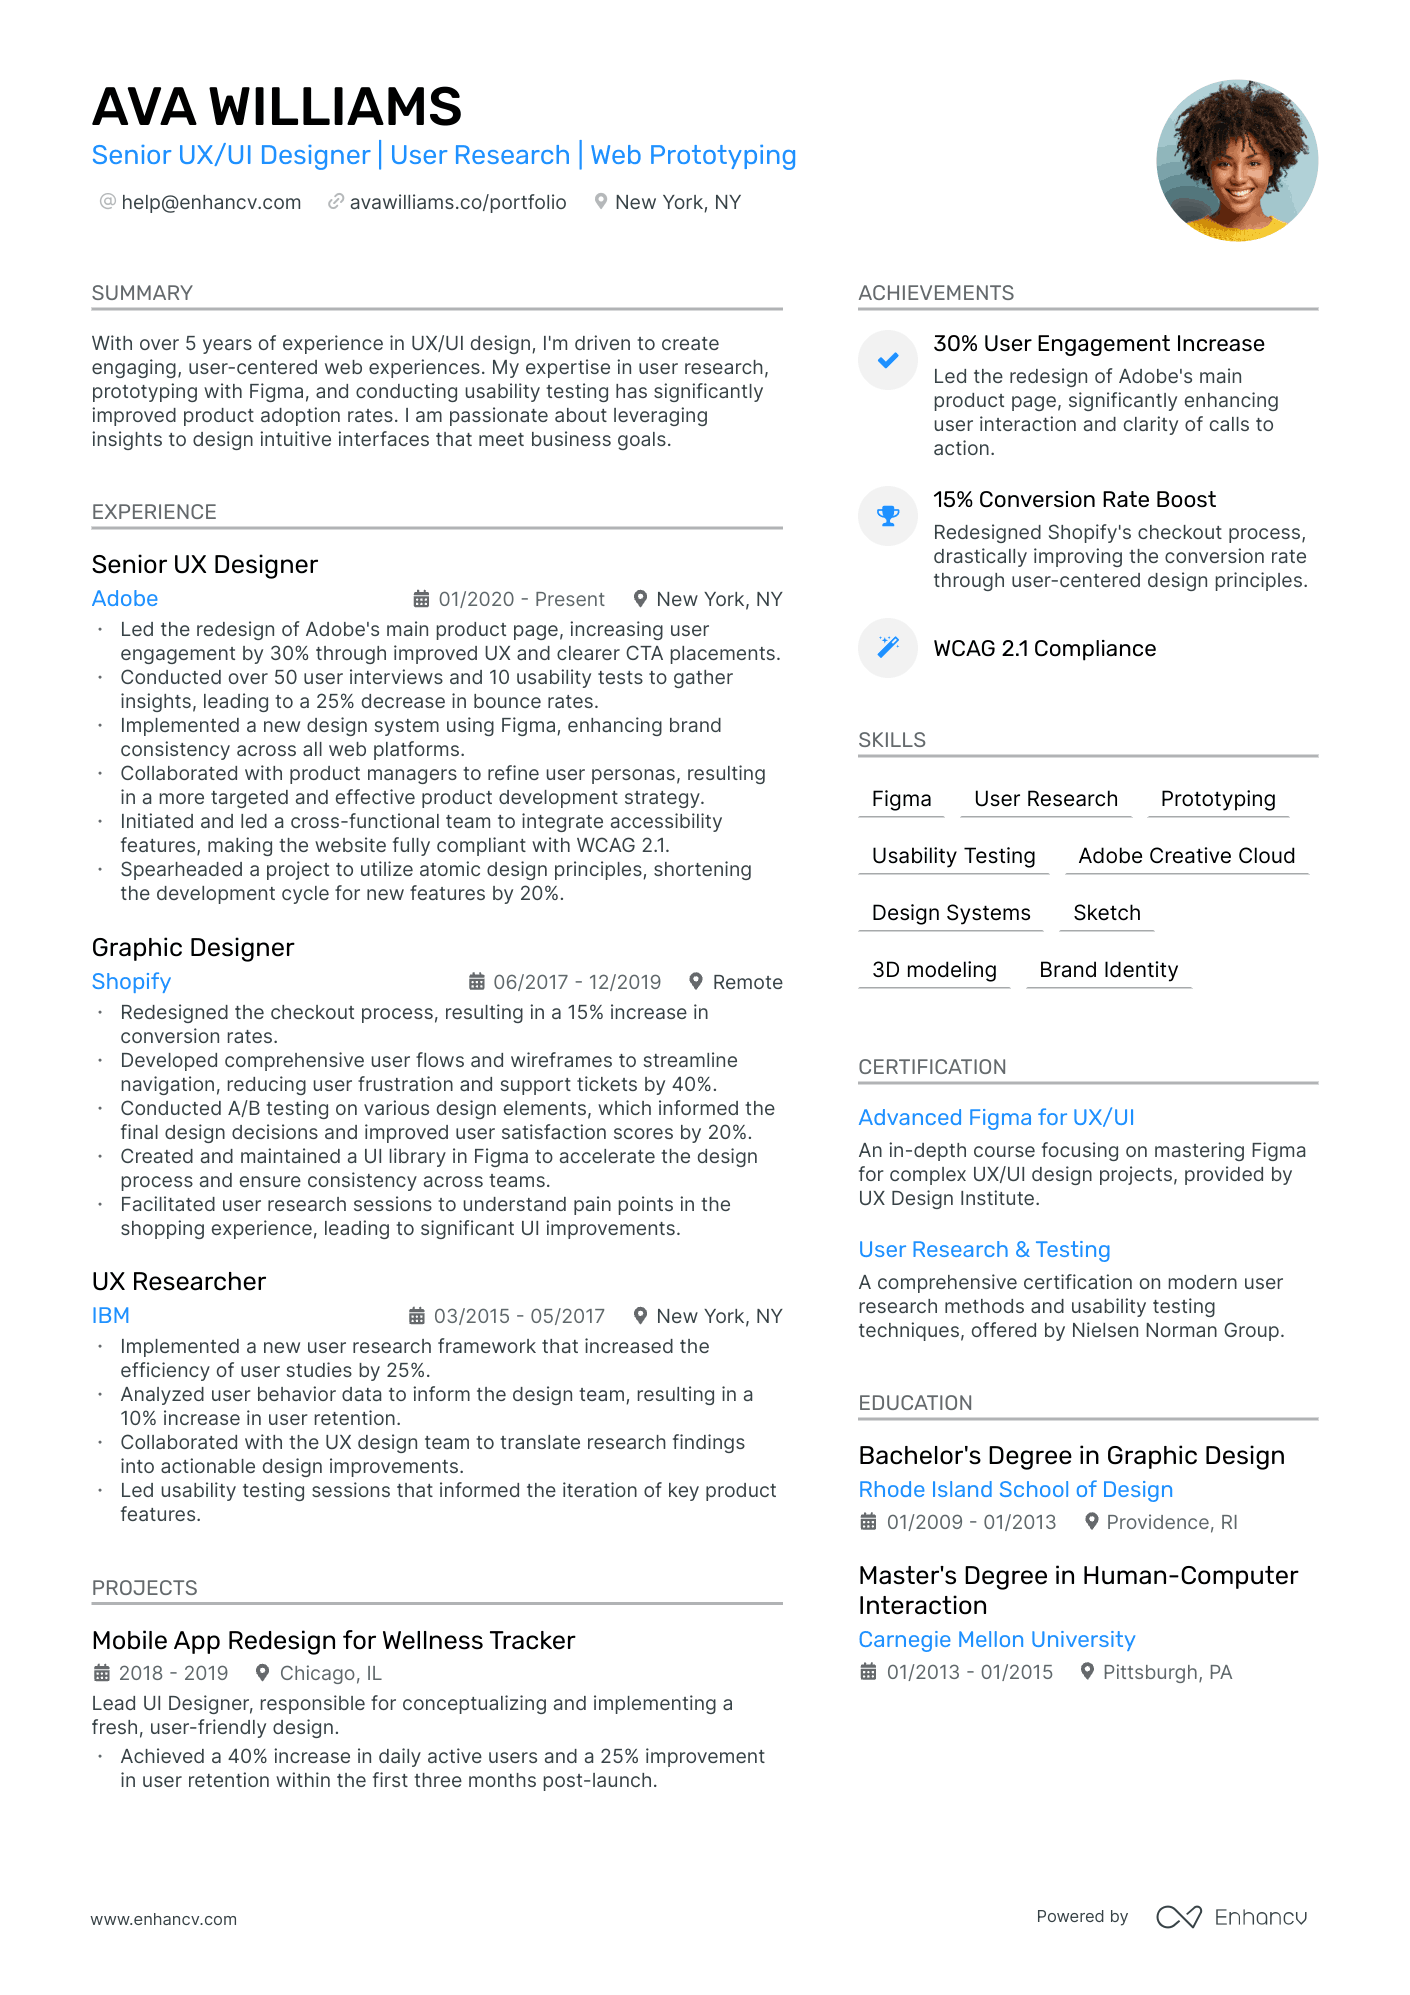 Senior UX/UI Designer | User Research | Web Prototyping resume example